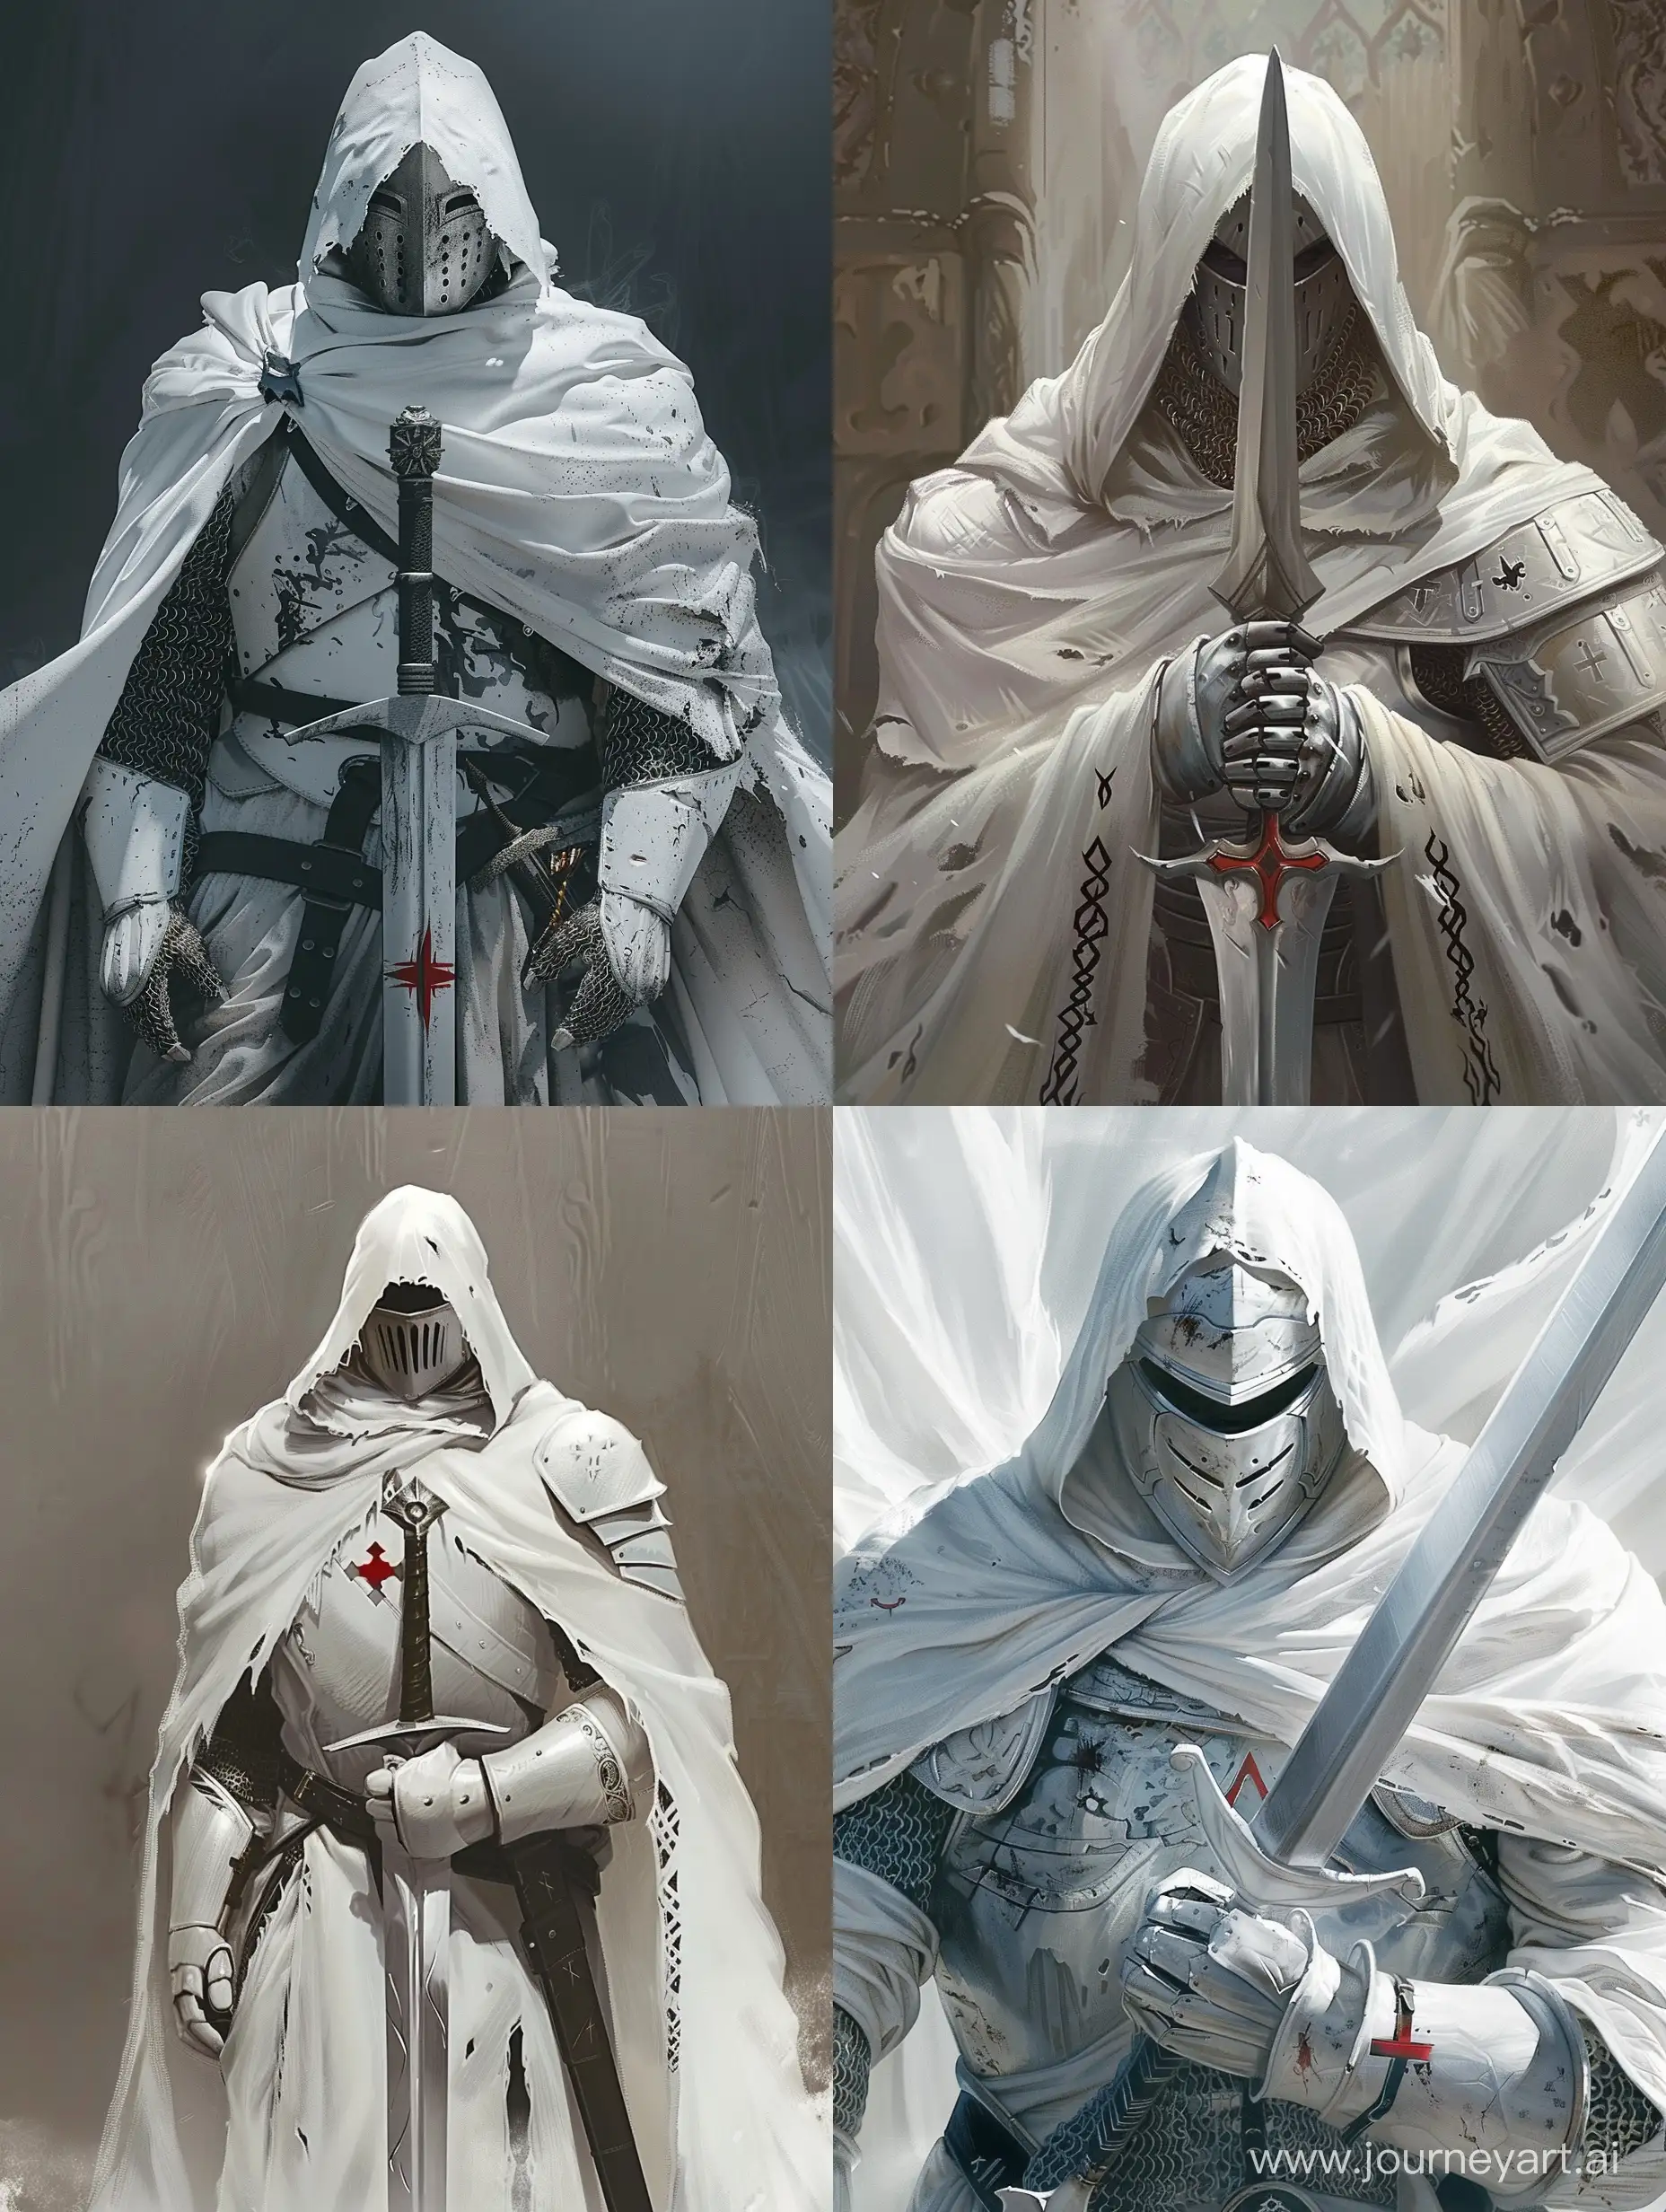 Valiant-Knight-of-Light-Cleansing-Evil-in-White-Armor